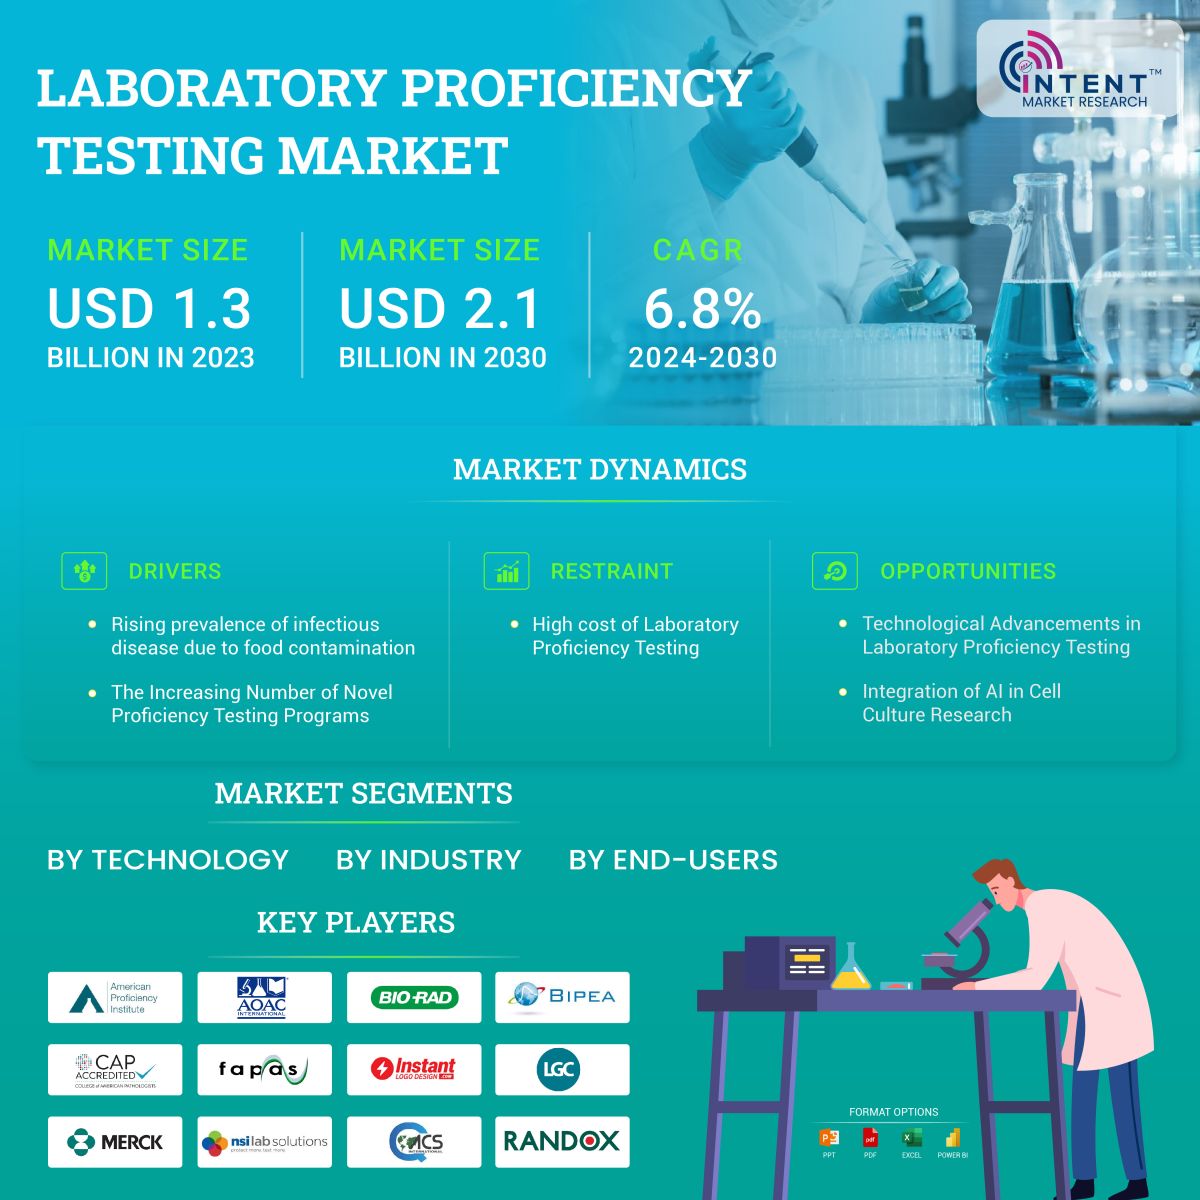 Laboratory Proficiency Testing Market Infoghraphics